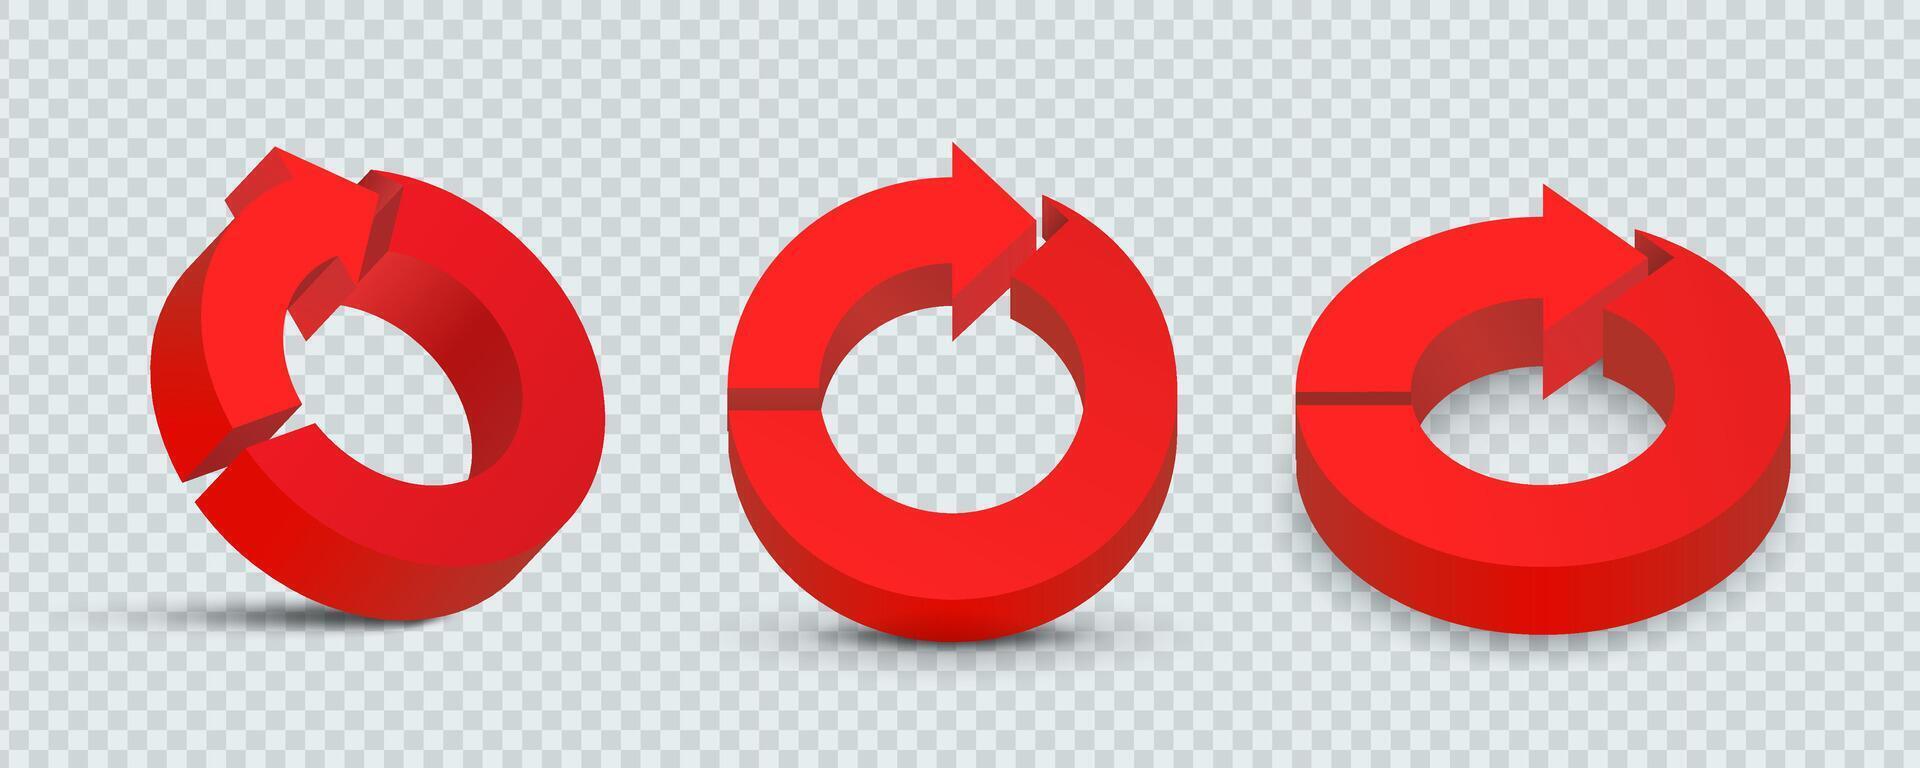 Rico rojo color circular 3d flecha ilustración en aislado antecedentes vector